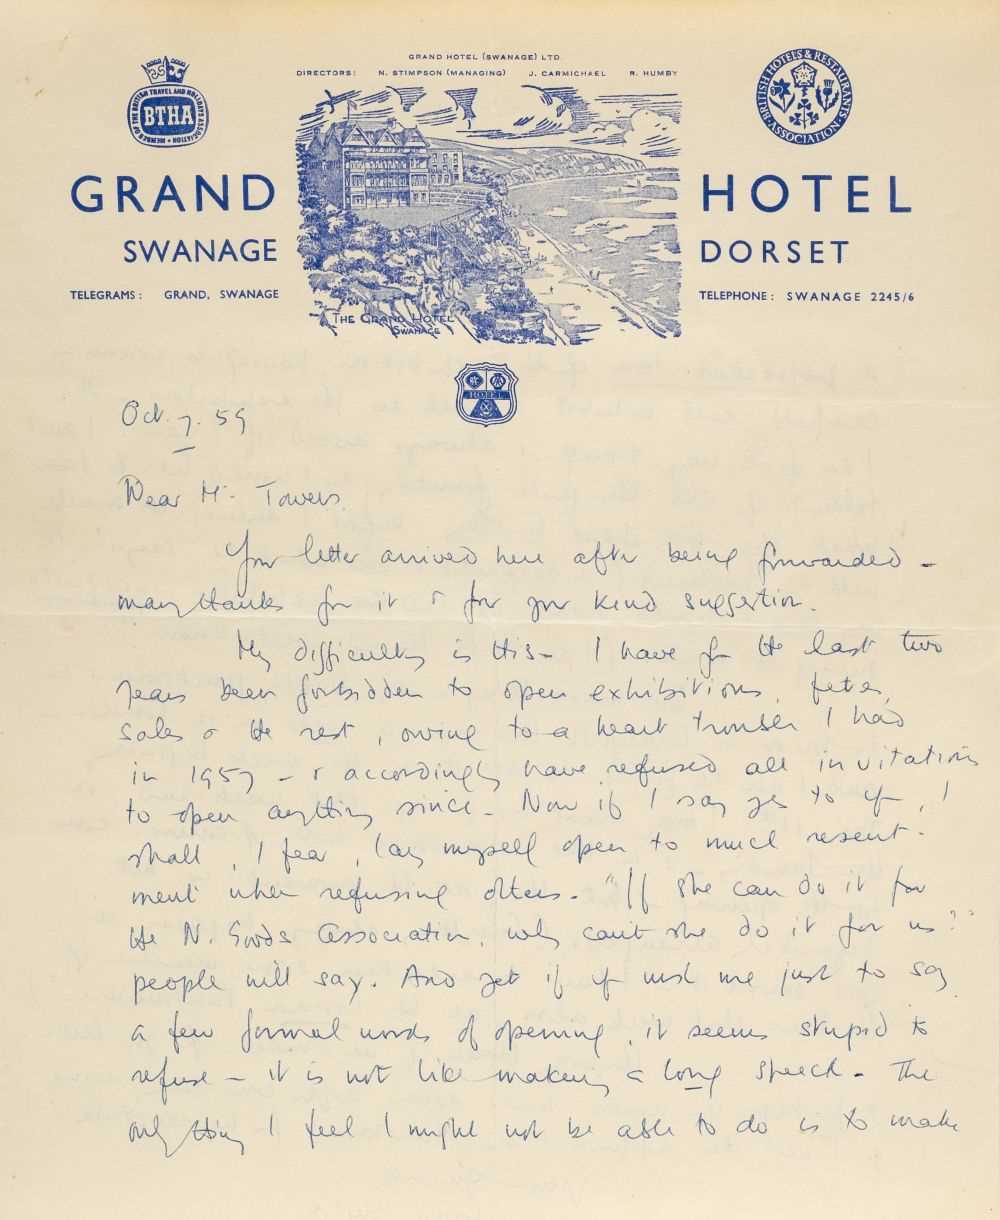 Lot 665 - Blyton (Enid, 1897-1968). Autograph letter signed, 7 October 1959